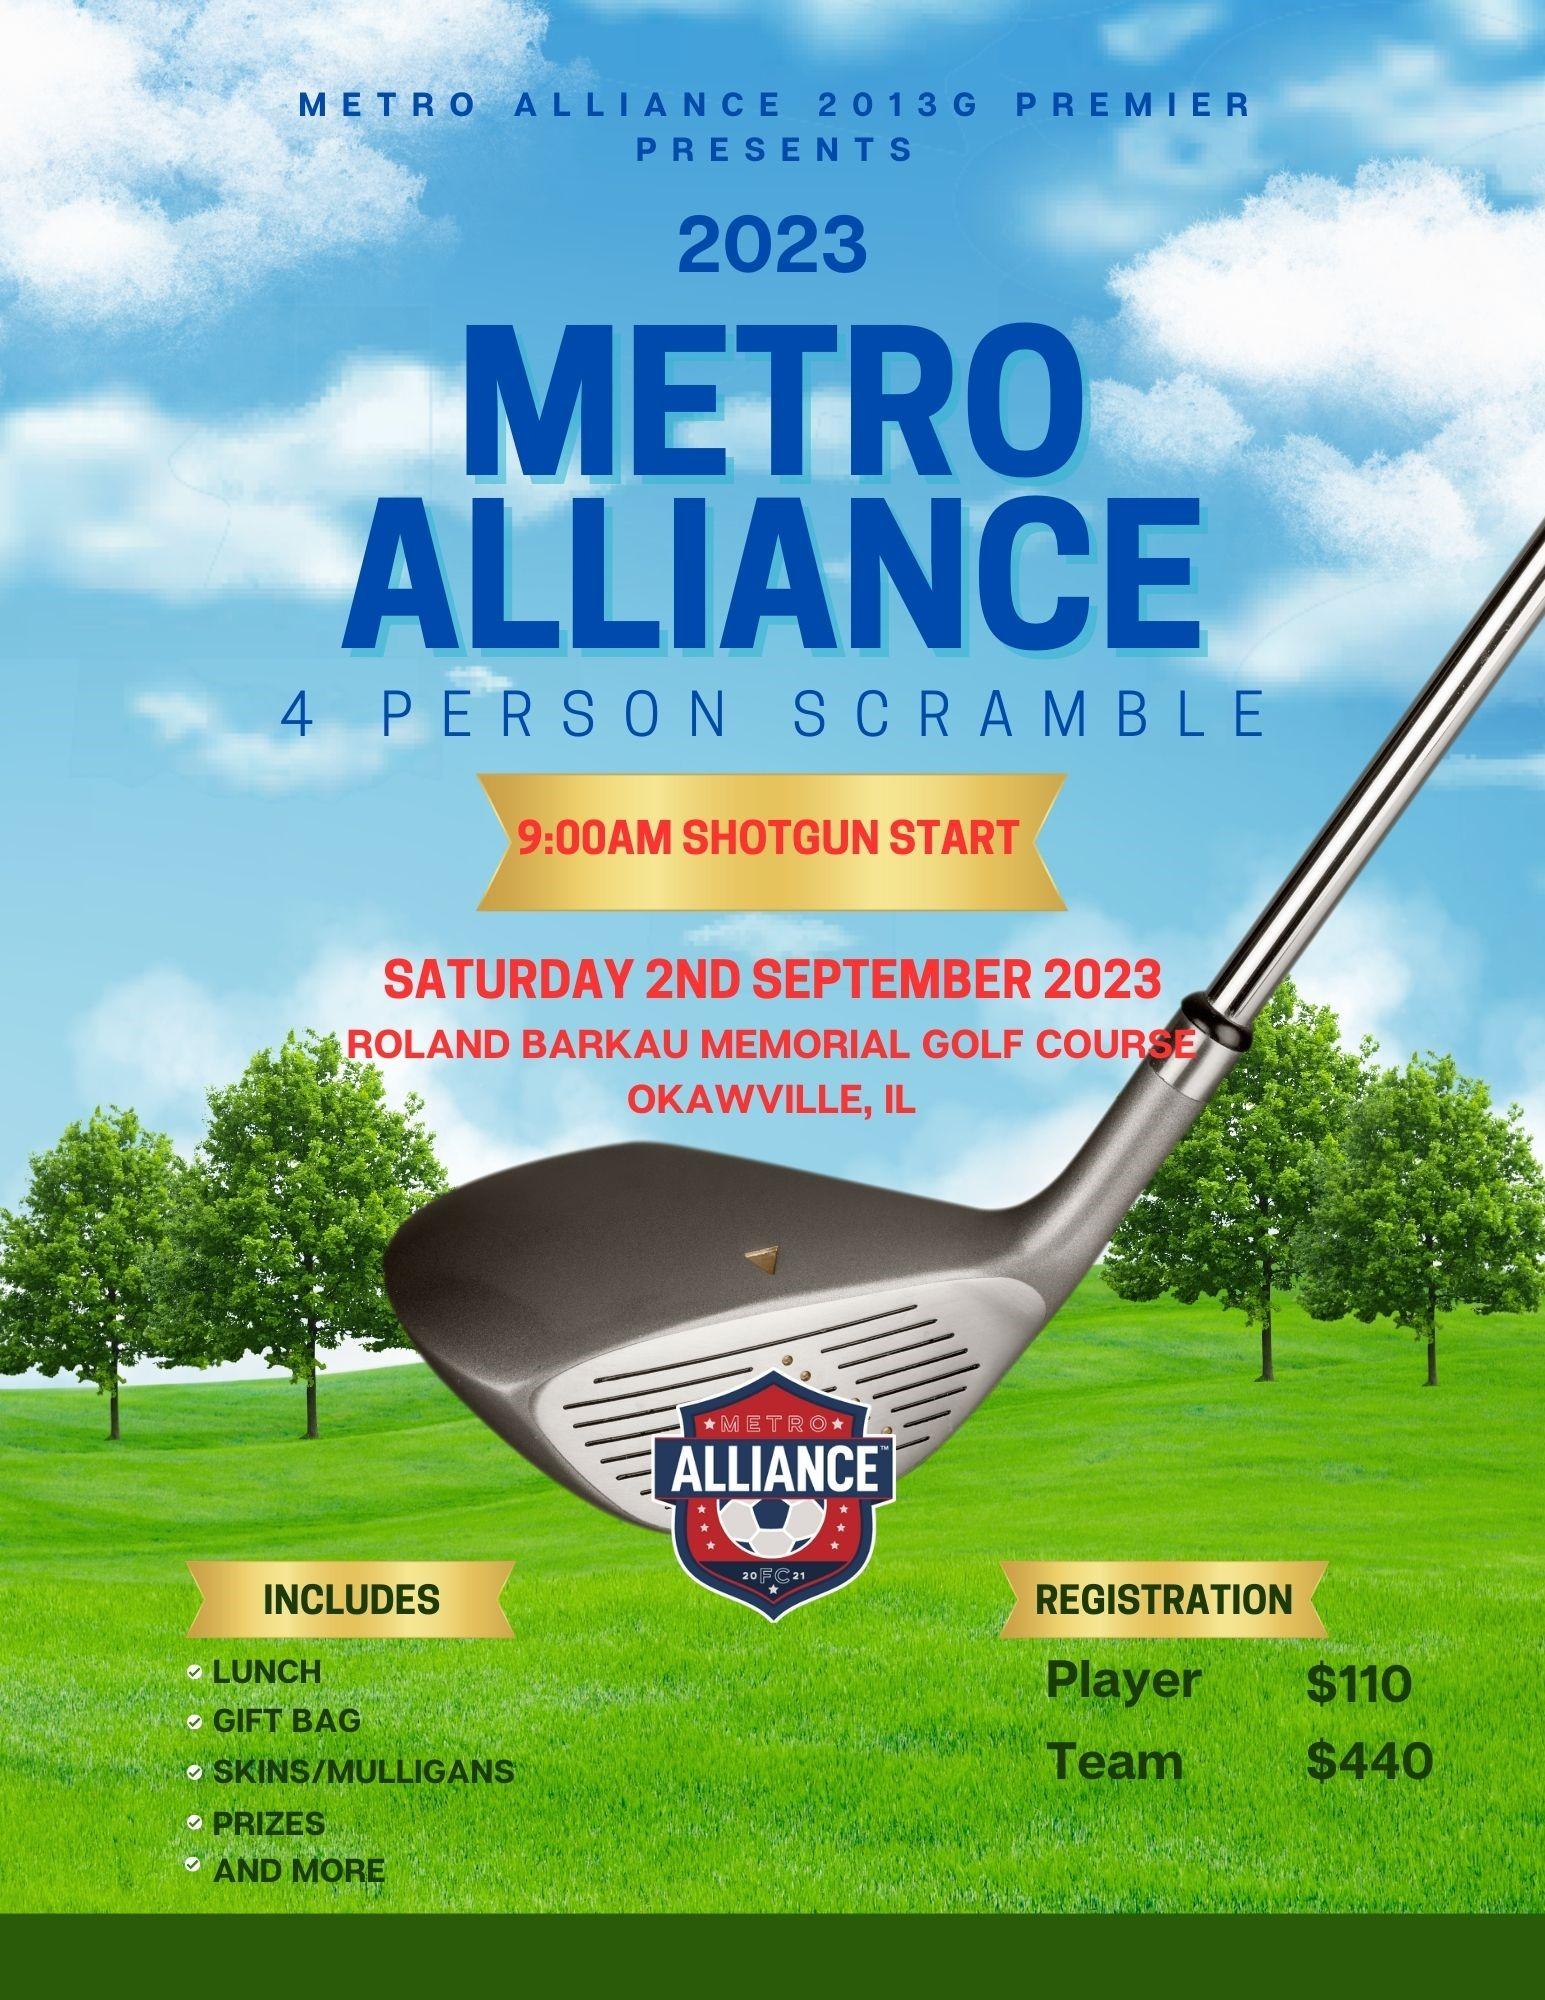 Metro Alliance 2013G Premier Golf Outing